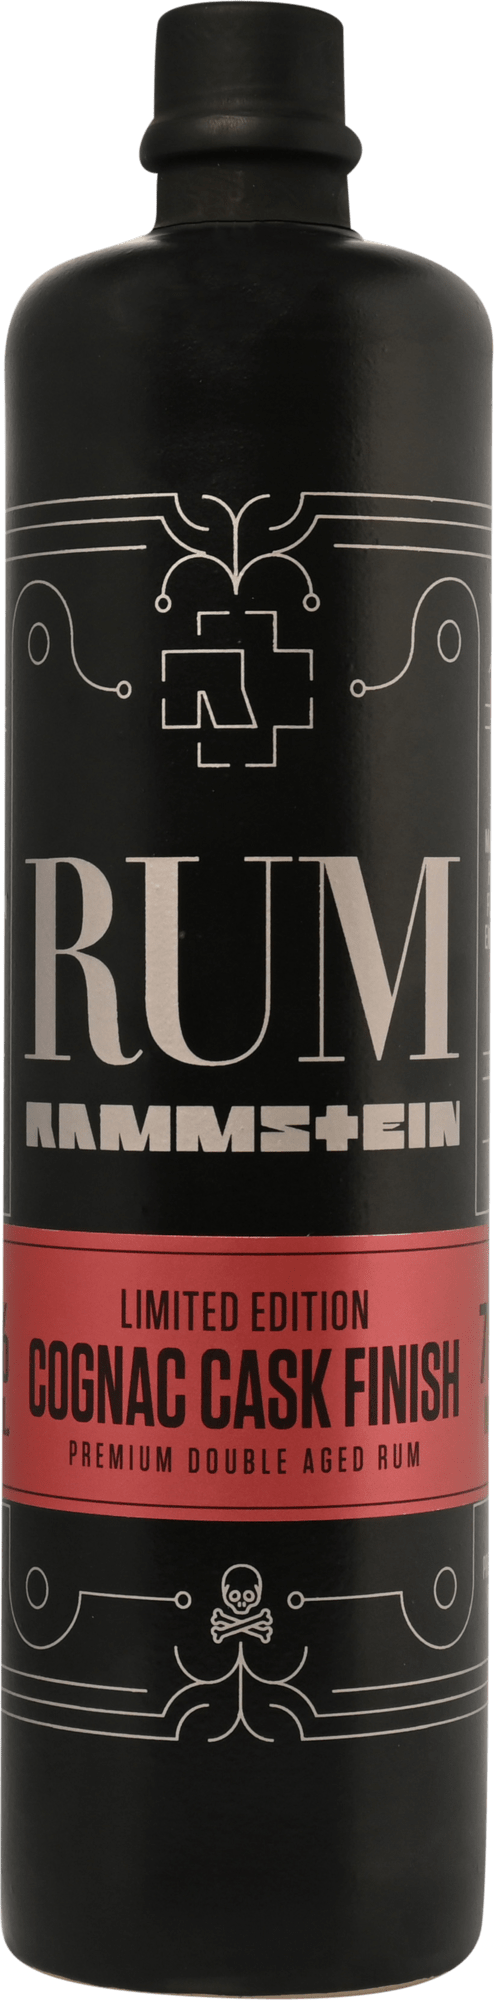 E-shop Rammstein Rum Cognac Cask Finish Limited Edition